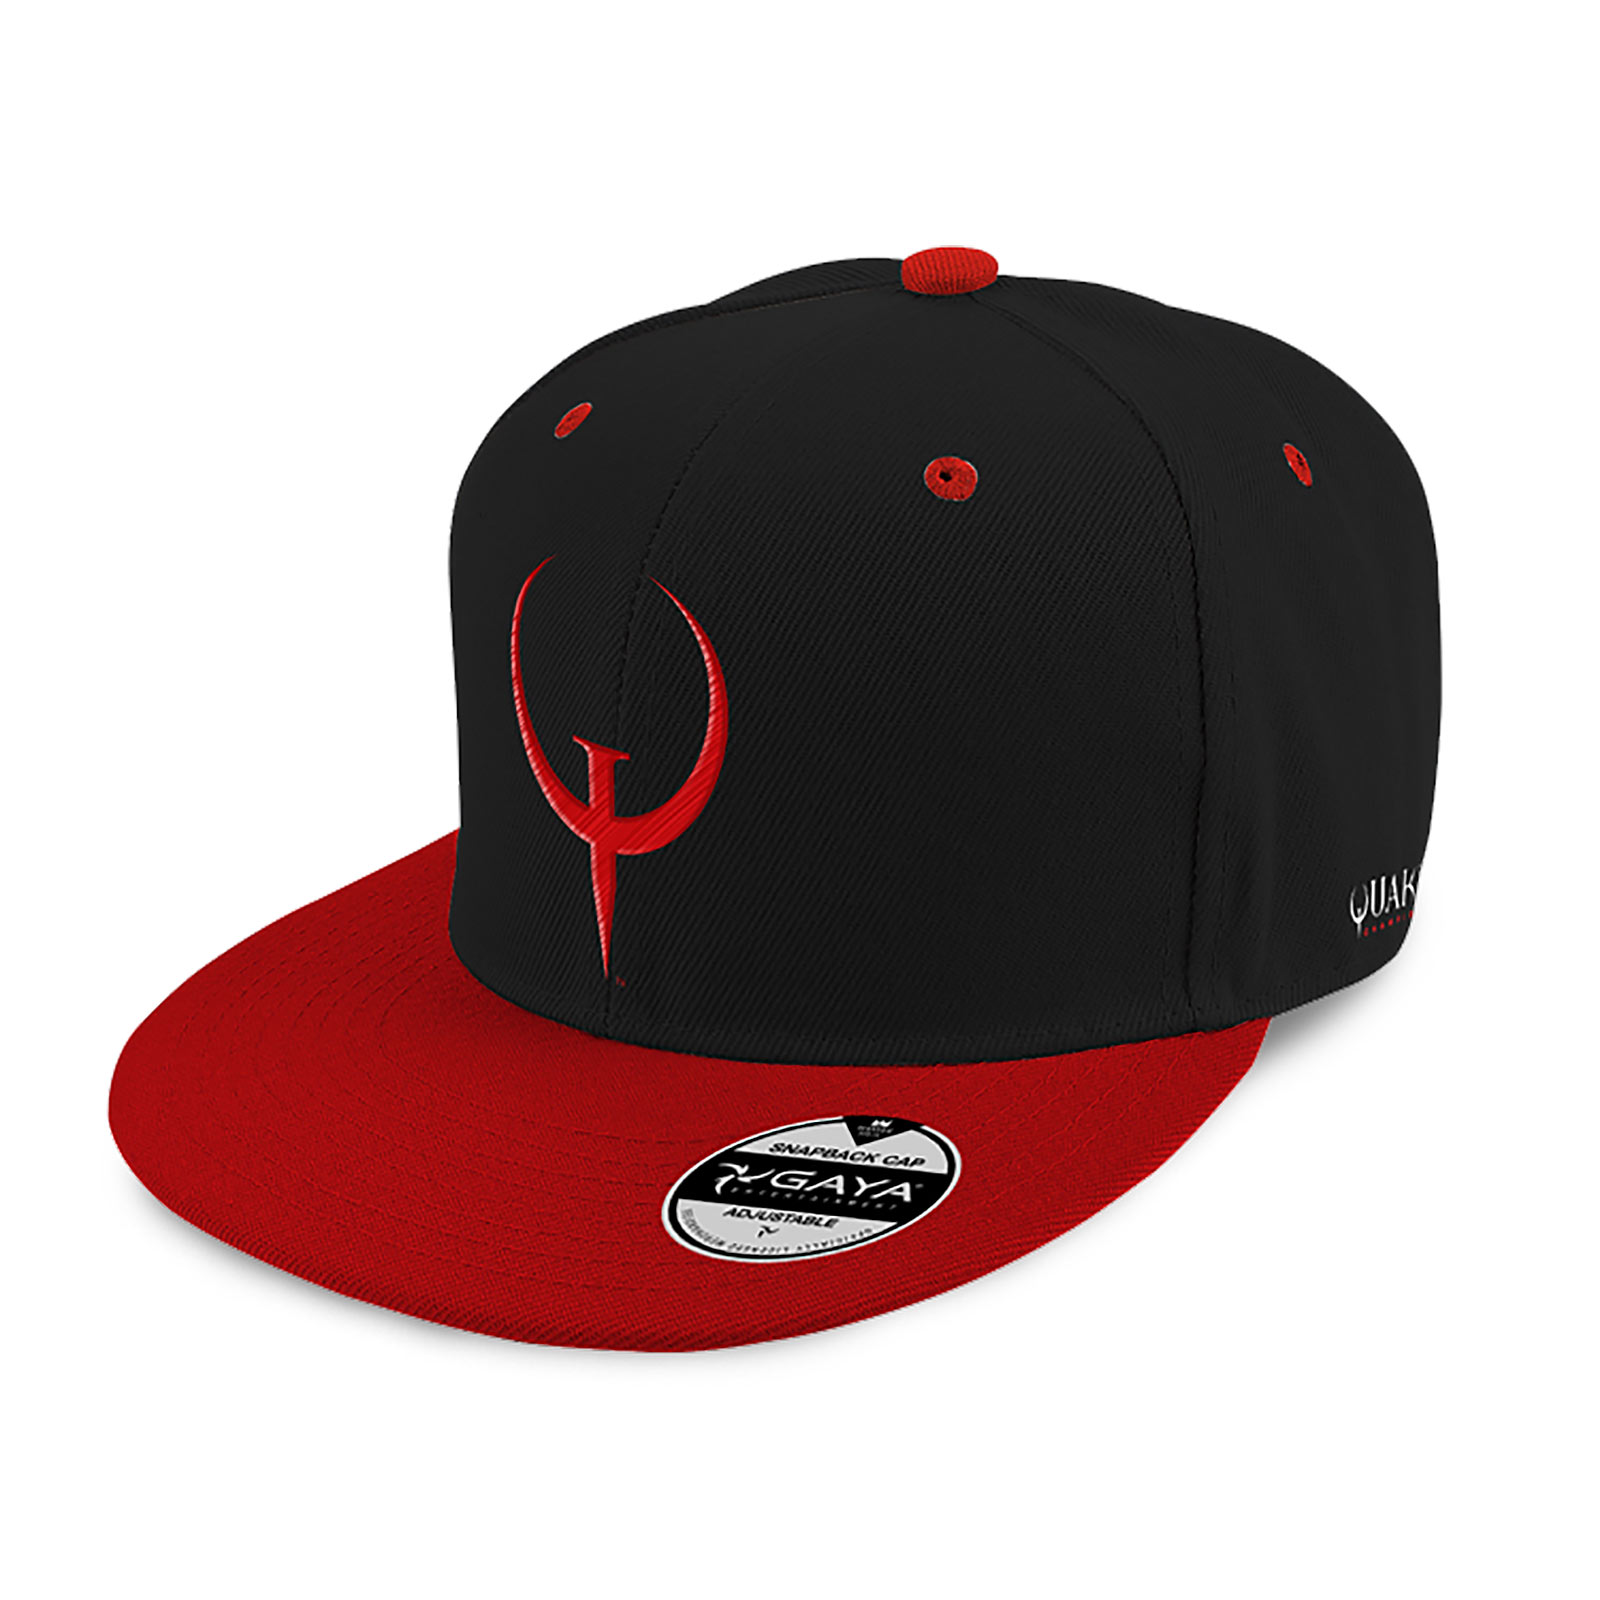 Quake - Logo Snapback Cap